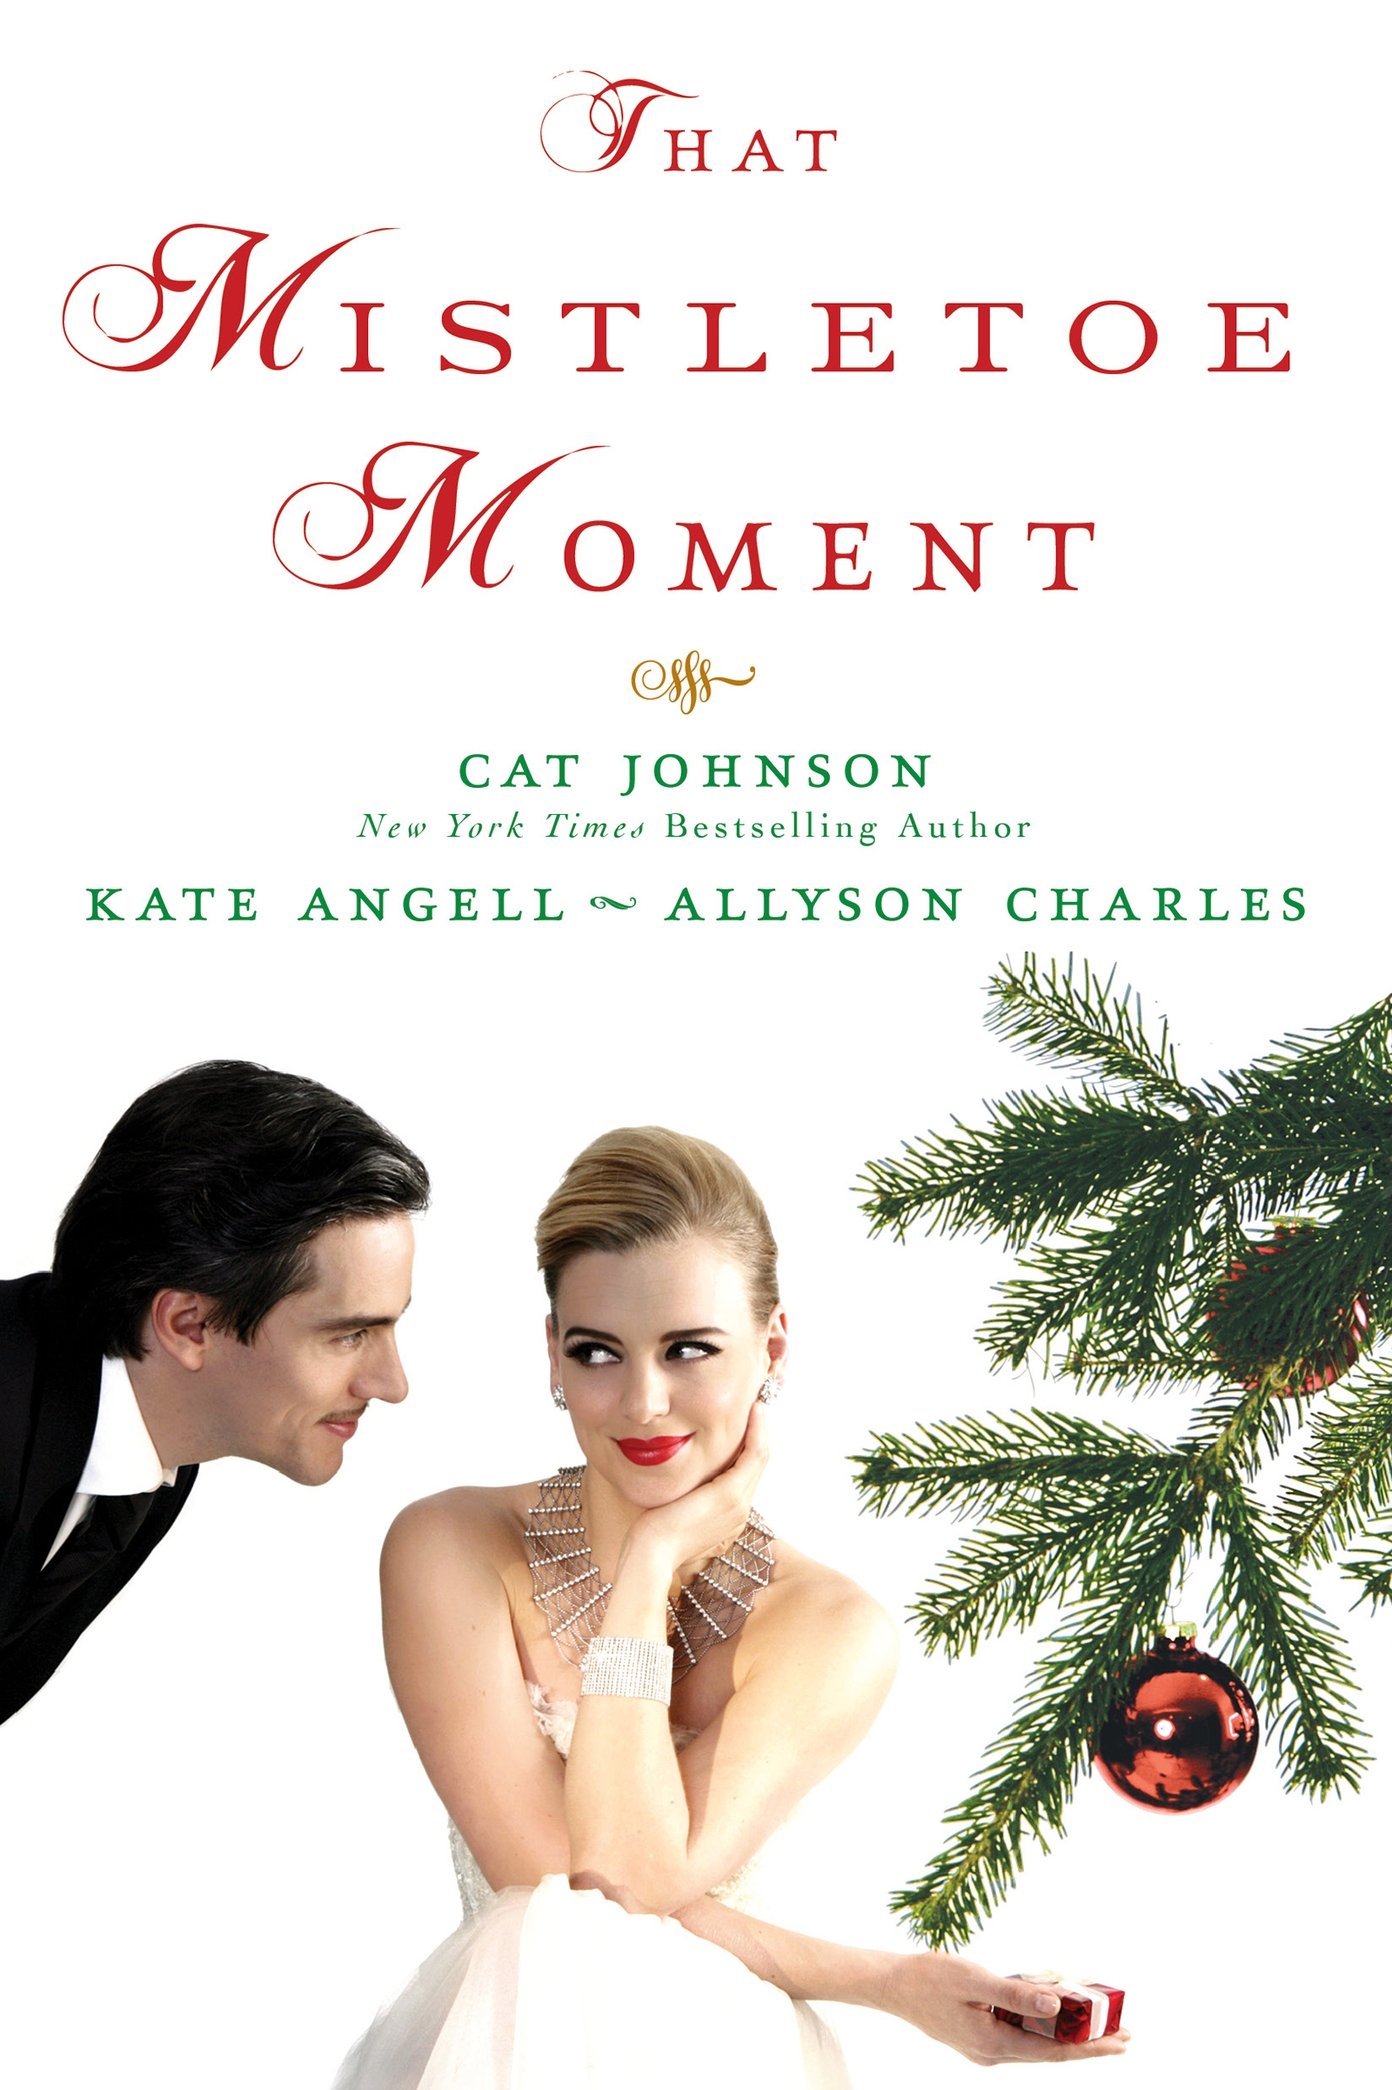 That Mistletoe Moment (2016) by Cat Johnson